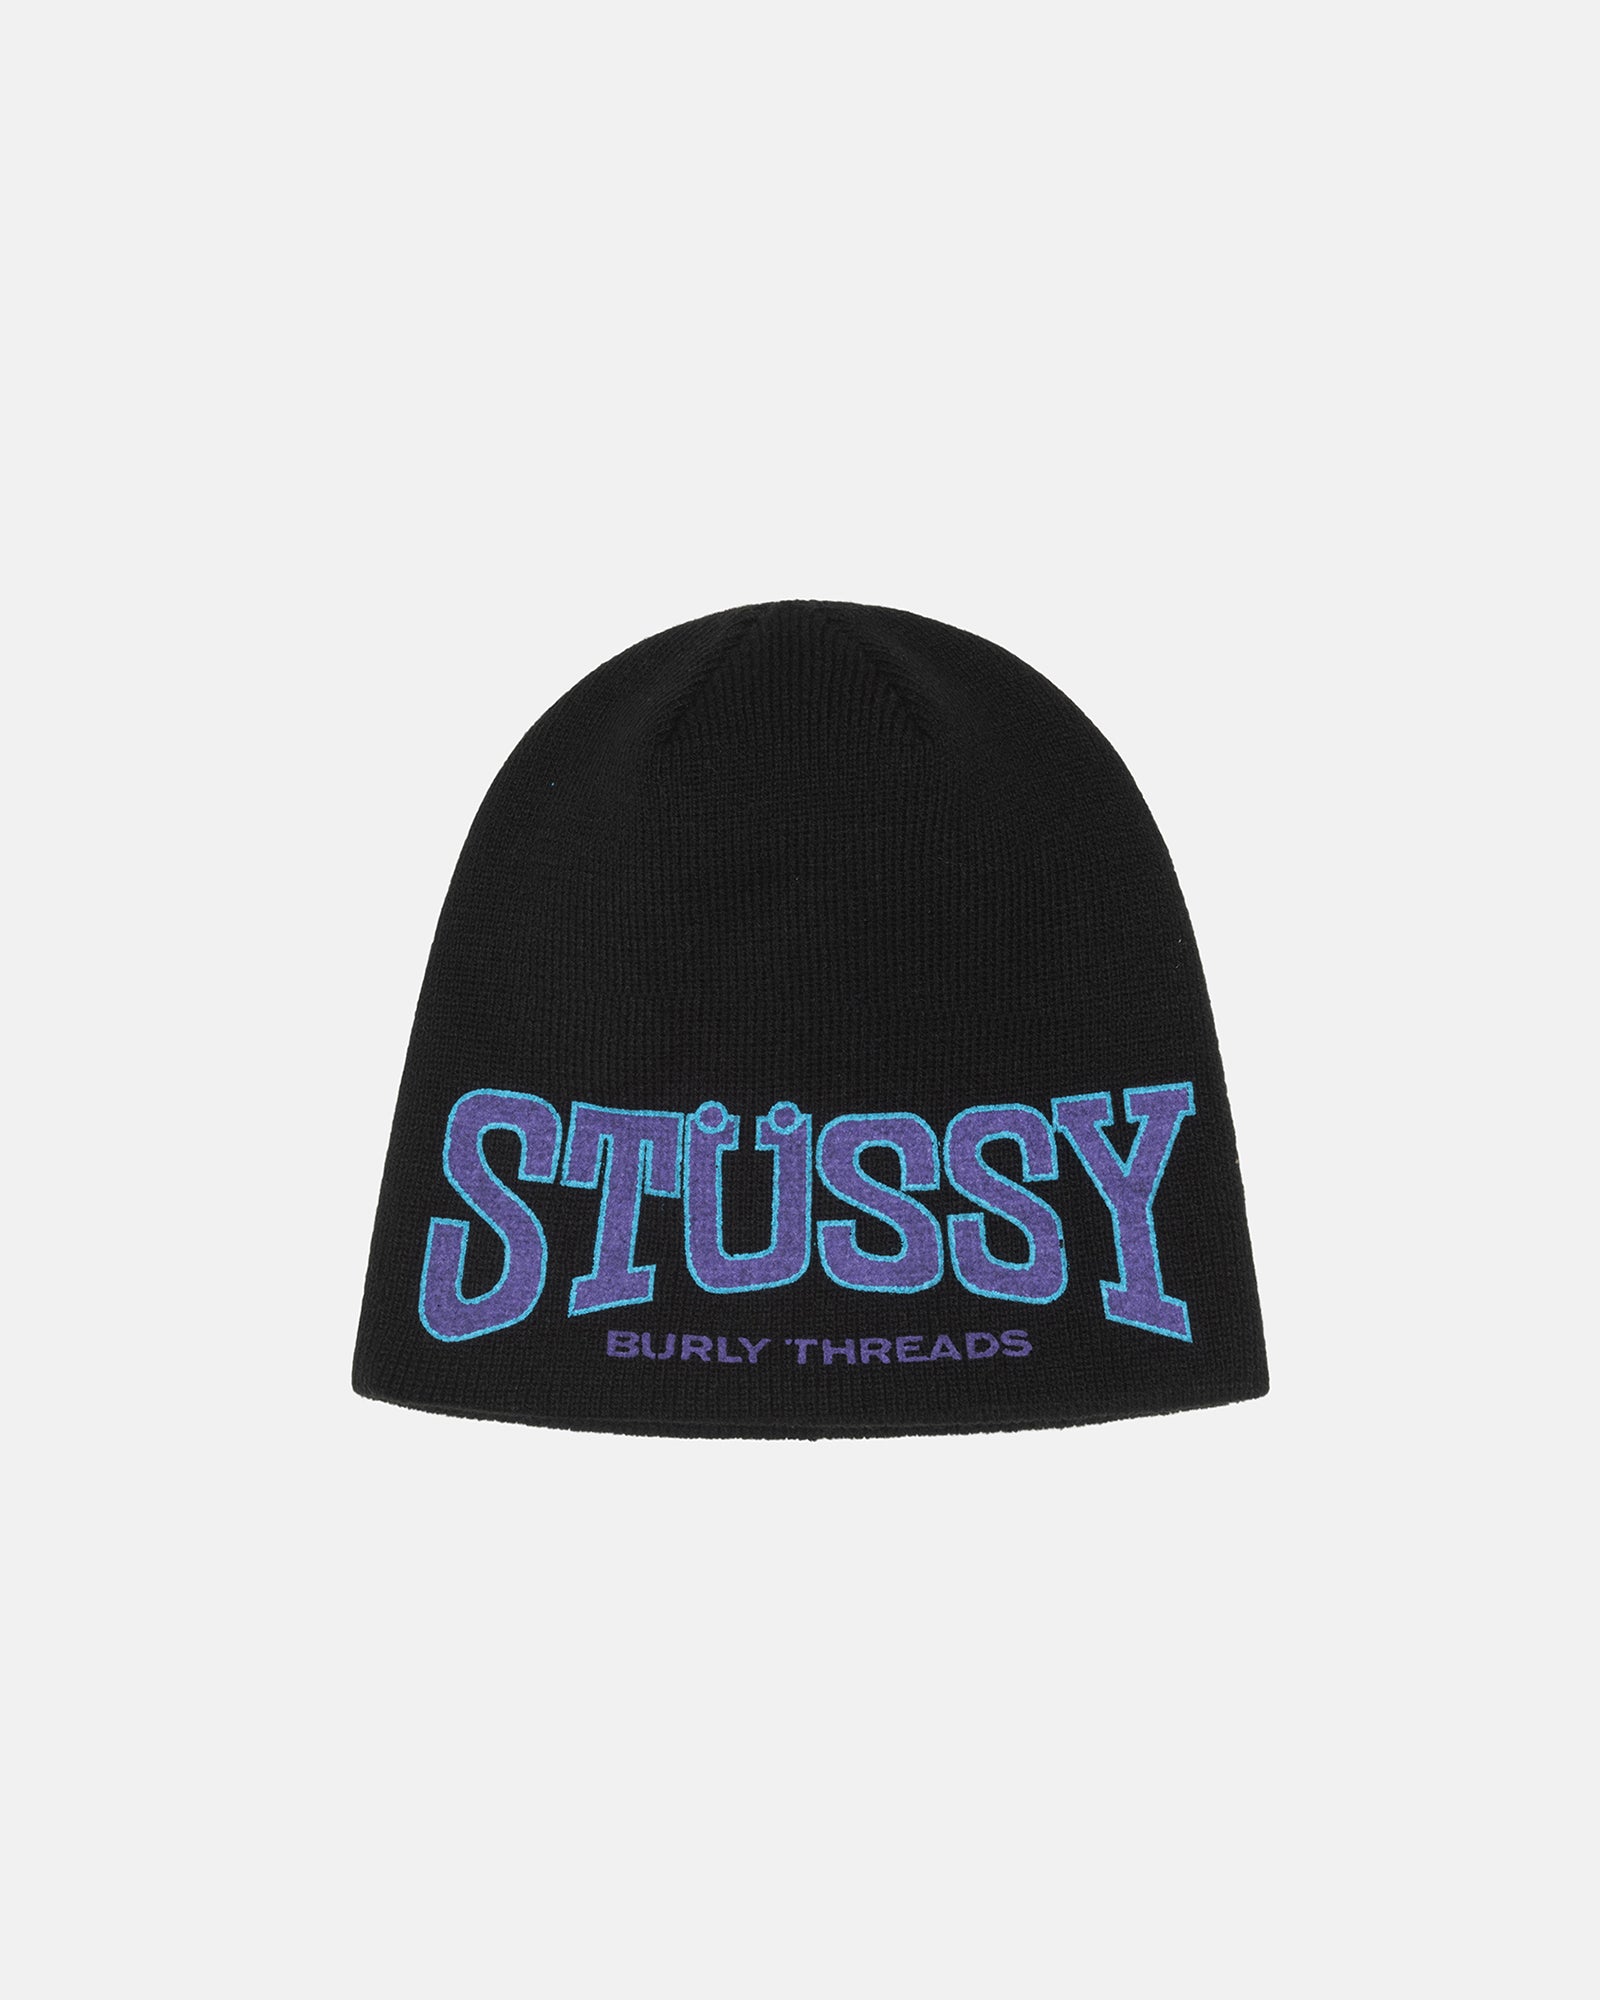 Stüssy Skullcap Burly Threads Black Headwear